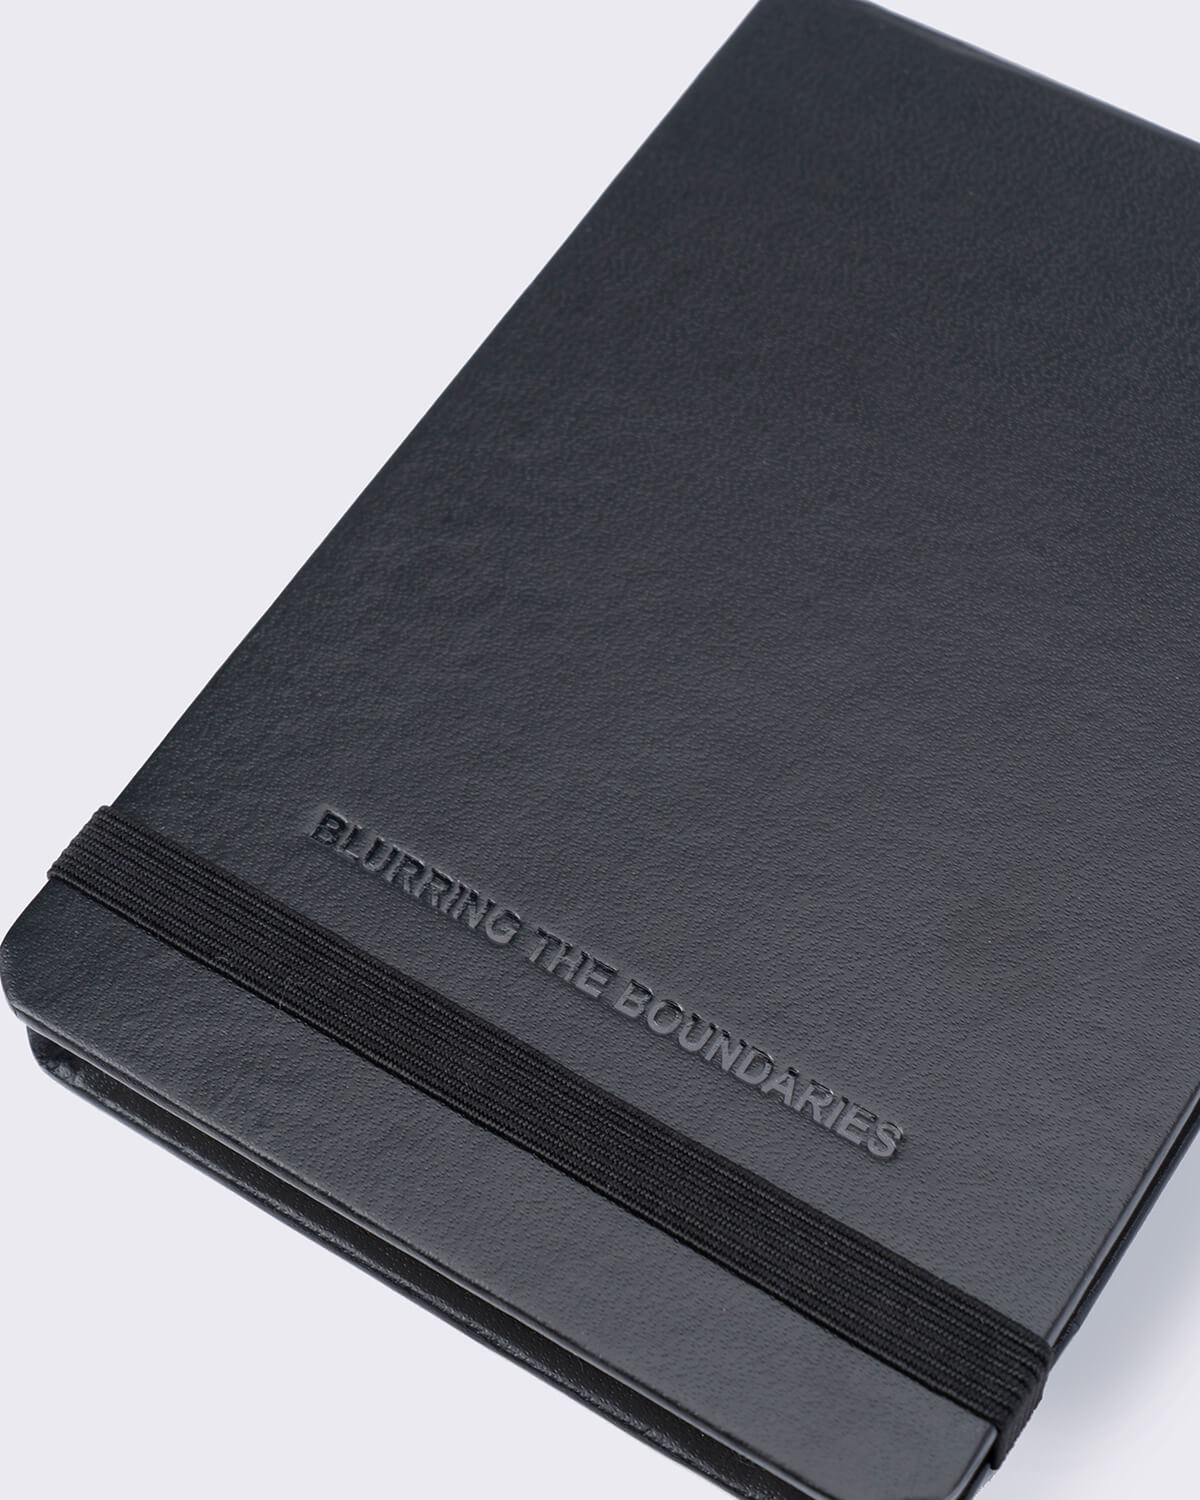 Gary Chang 'Hotel Floor Plan' Pocket Notebook